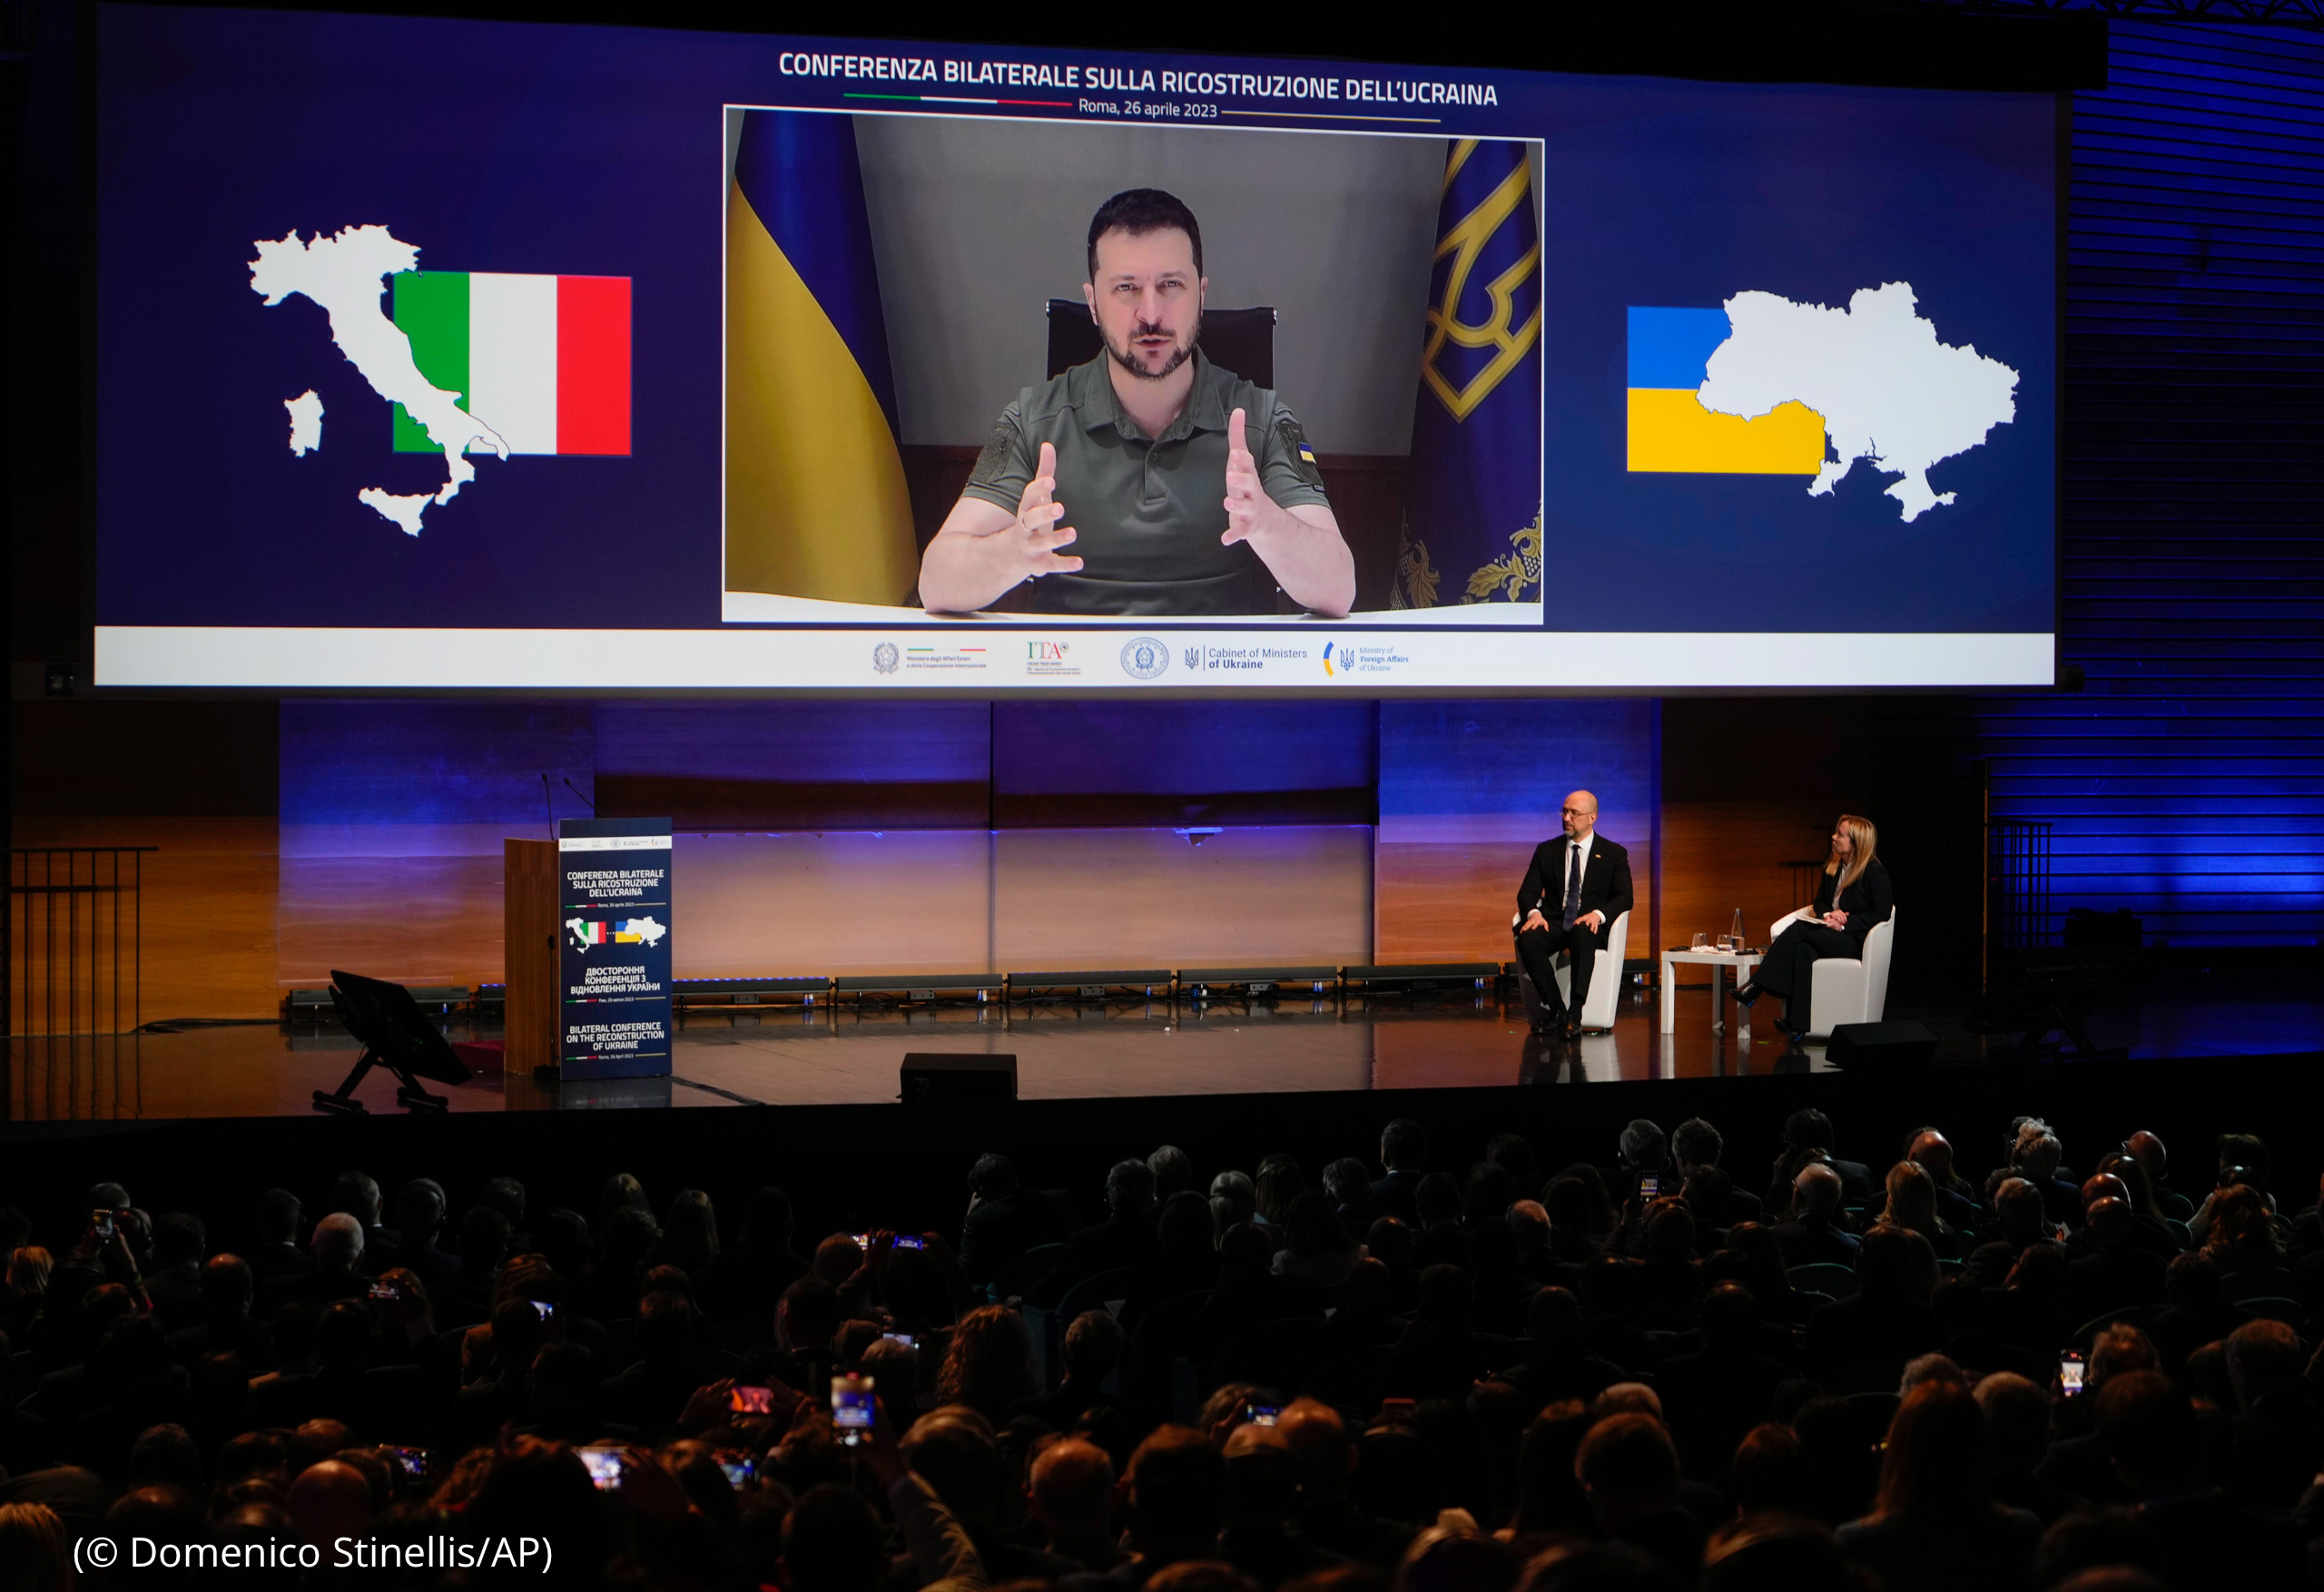 Volodymyr Zelenskyy speaking on large screen above stage in auditorium (© Domenico Stinellis/AP)